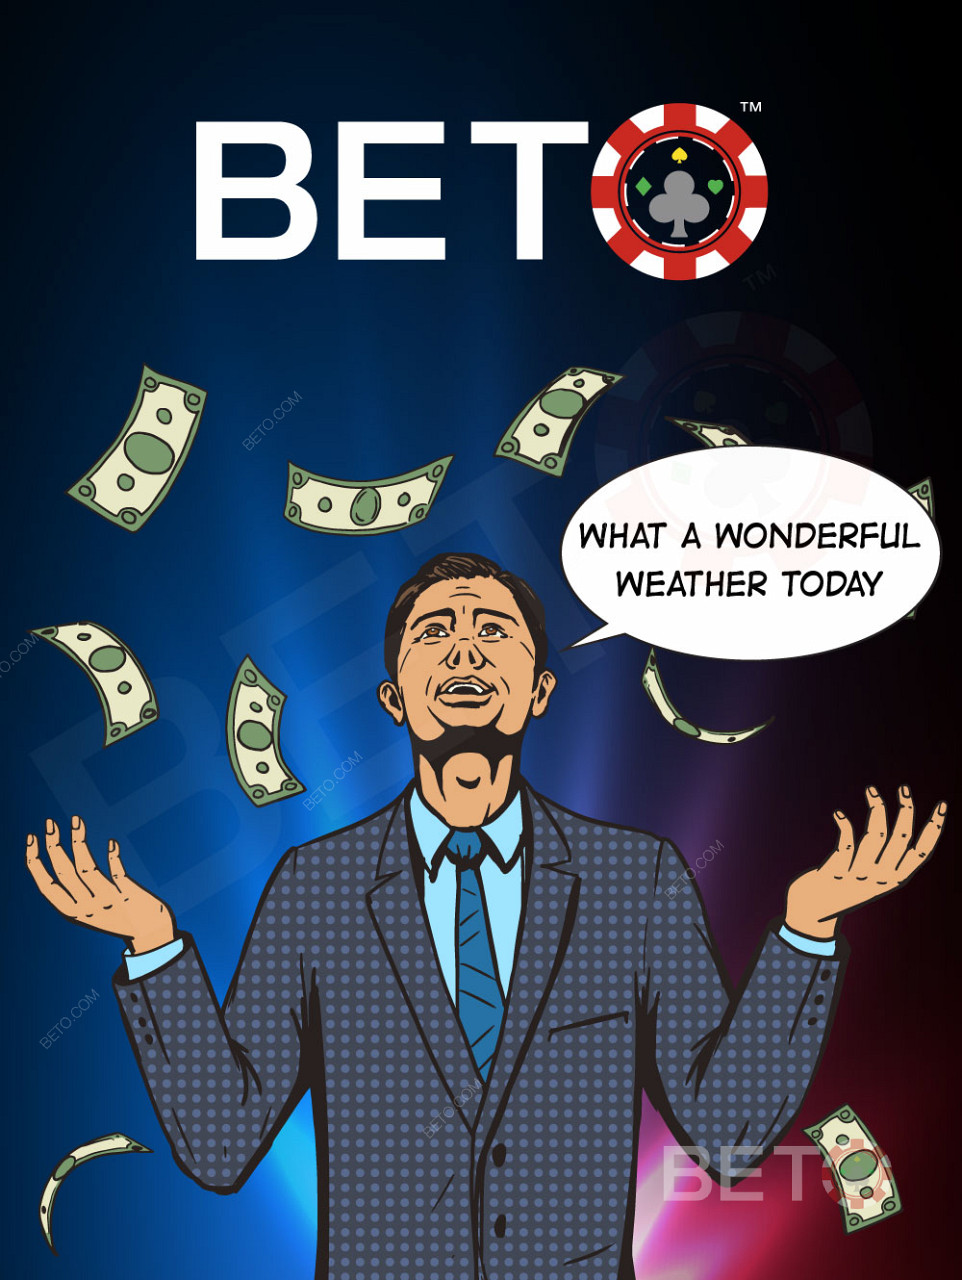 BETO will make it rain with the best casino bonuses!